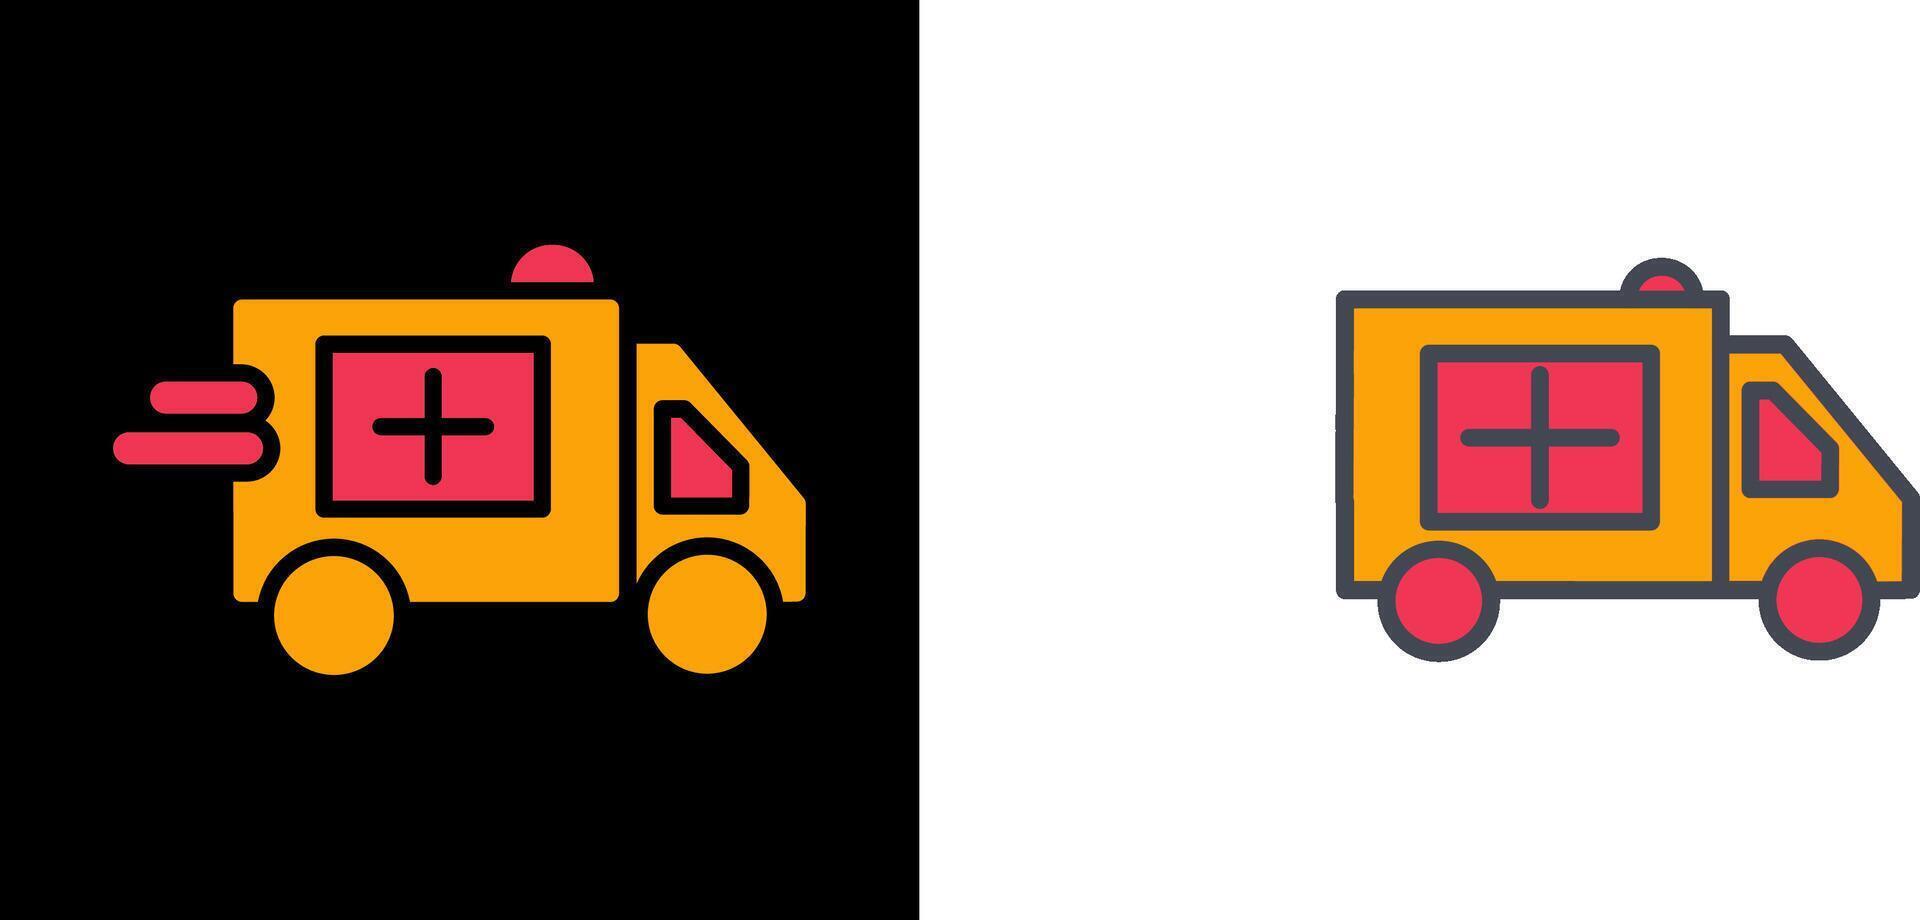 Ambulance Icon Design vector